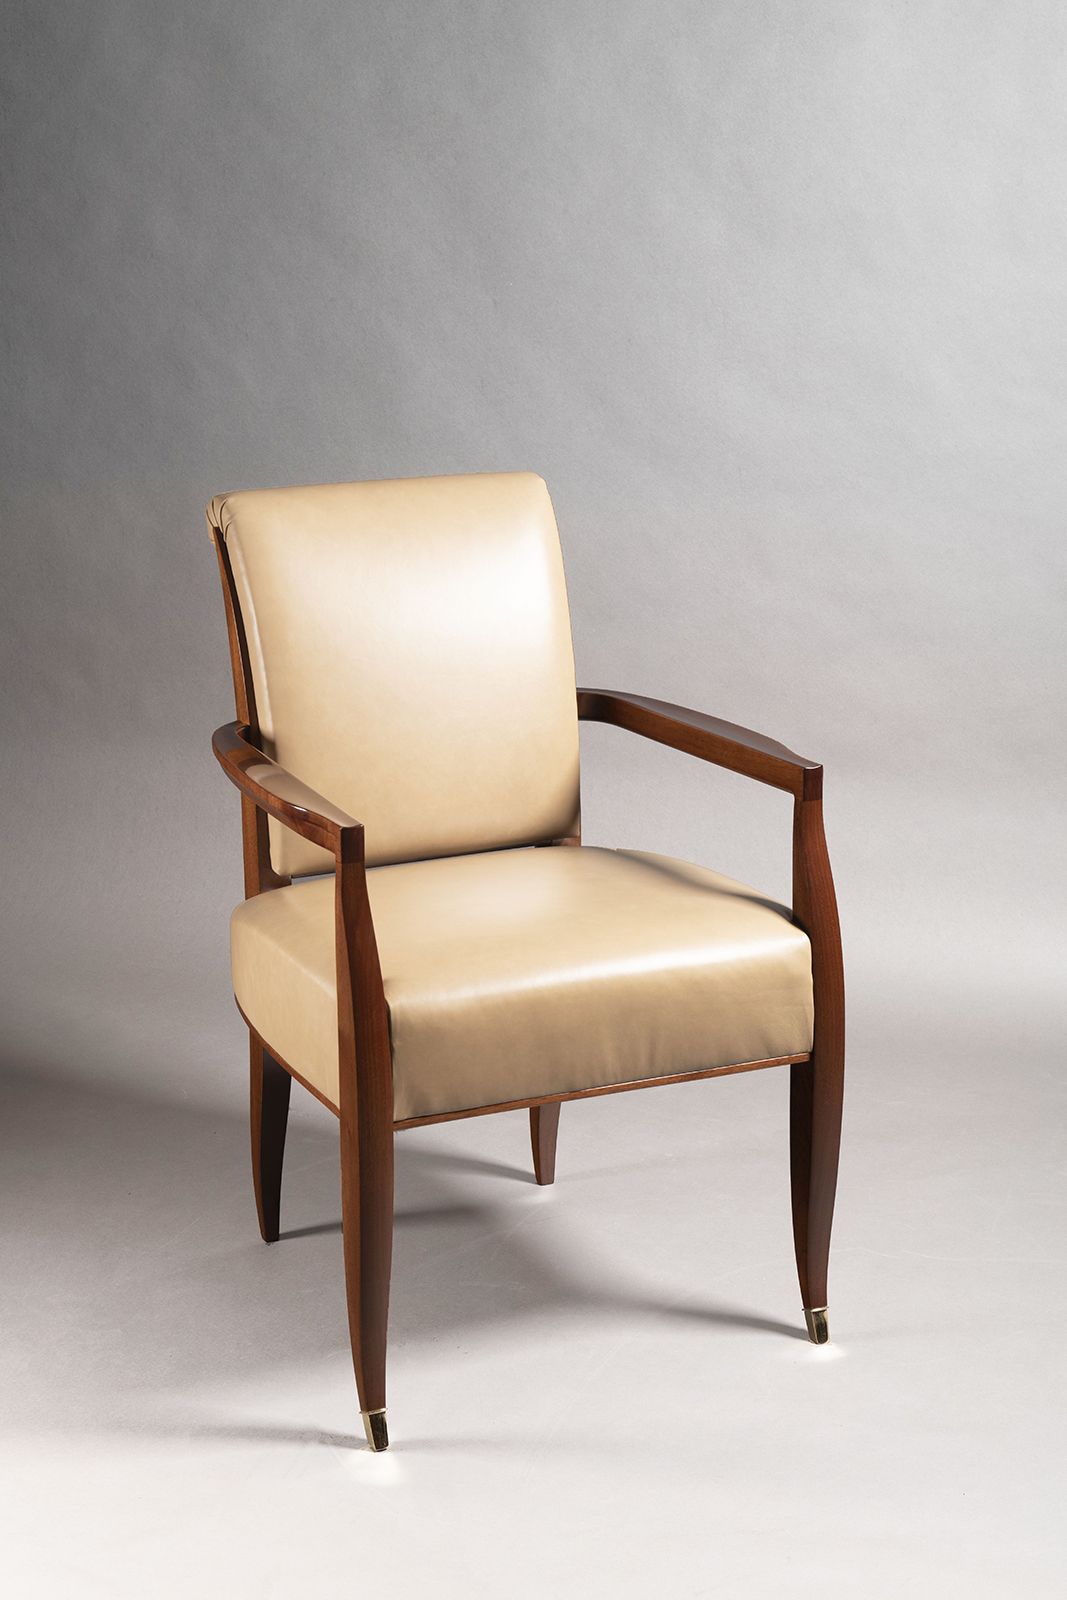 A Single Elegant French 40’s Inspired Armchair by ILIAD Design